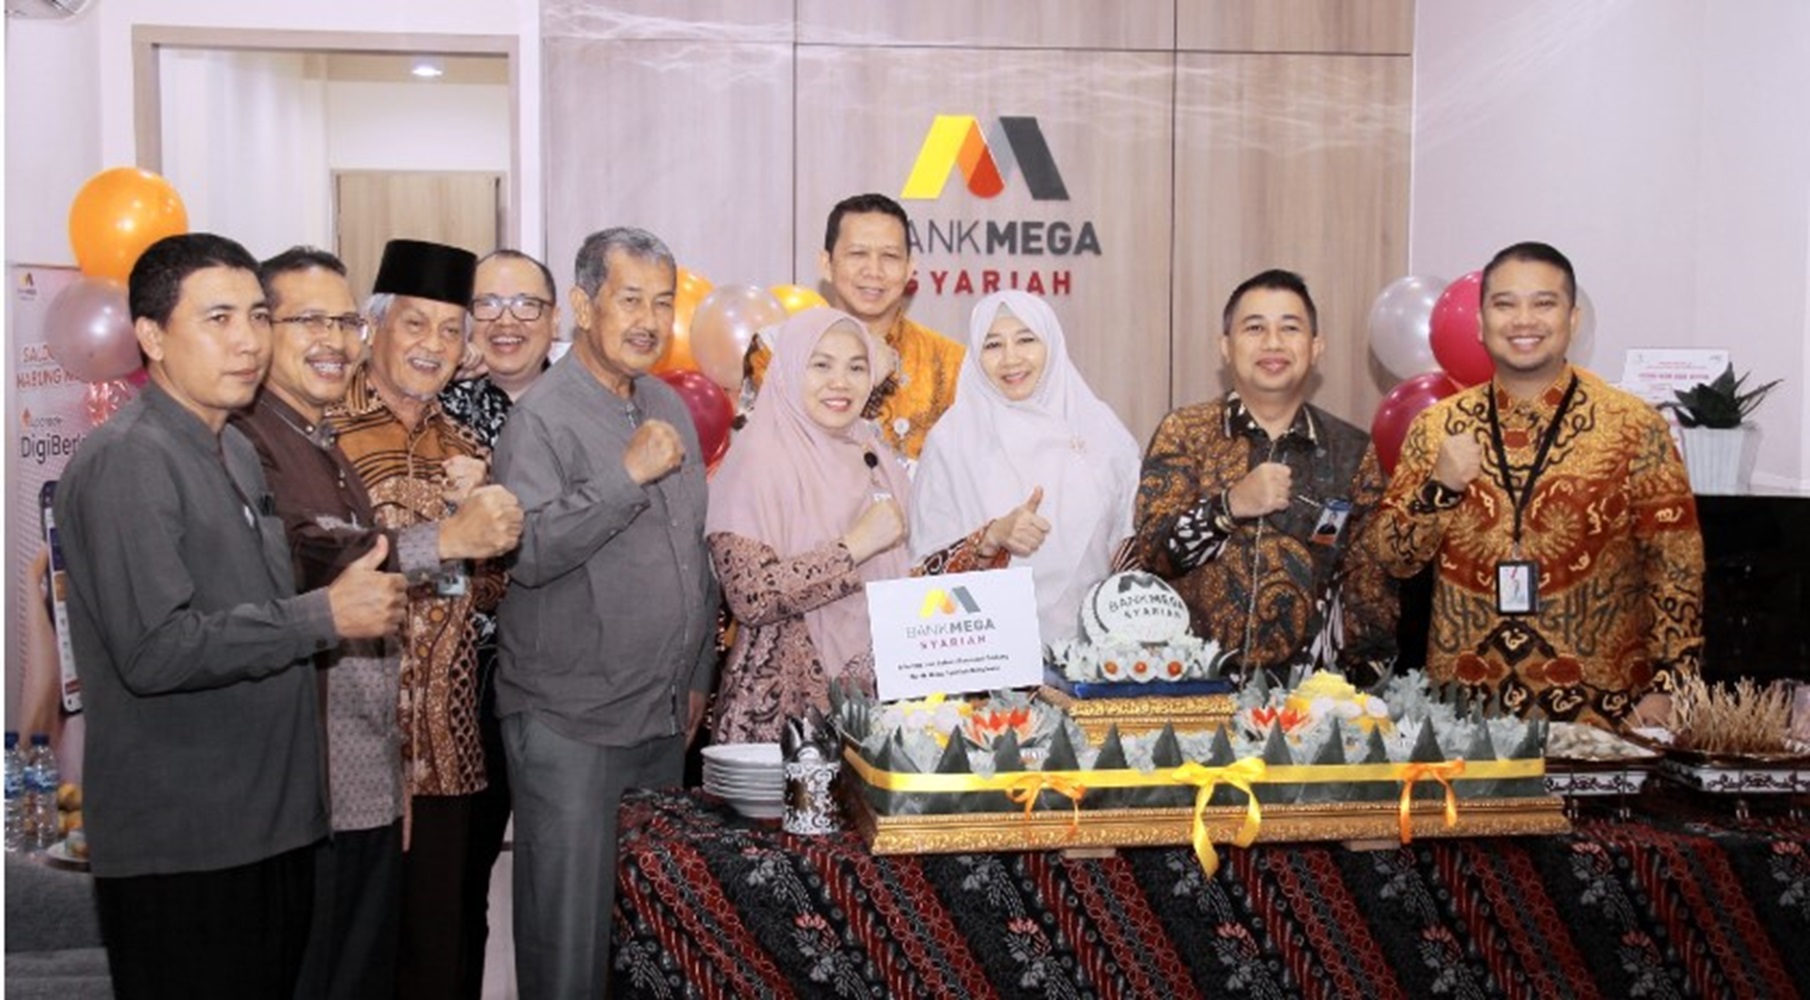 Renovasi Kantor Cabang, Bank Mega Syariah Optimalisasi Layanan di Bengkulu